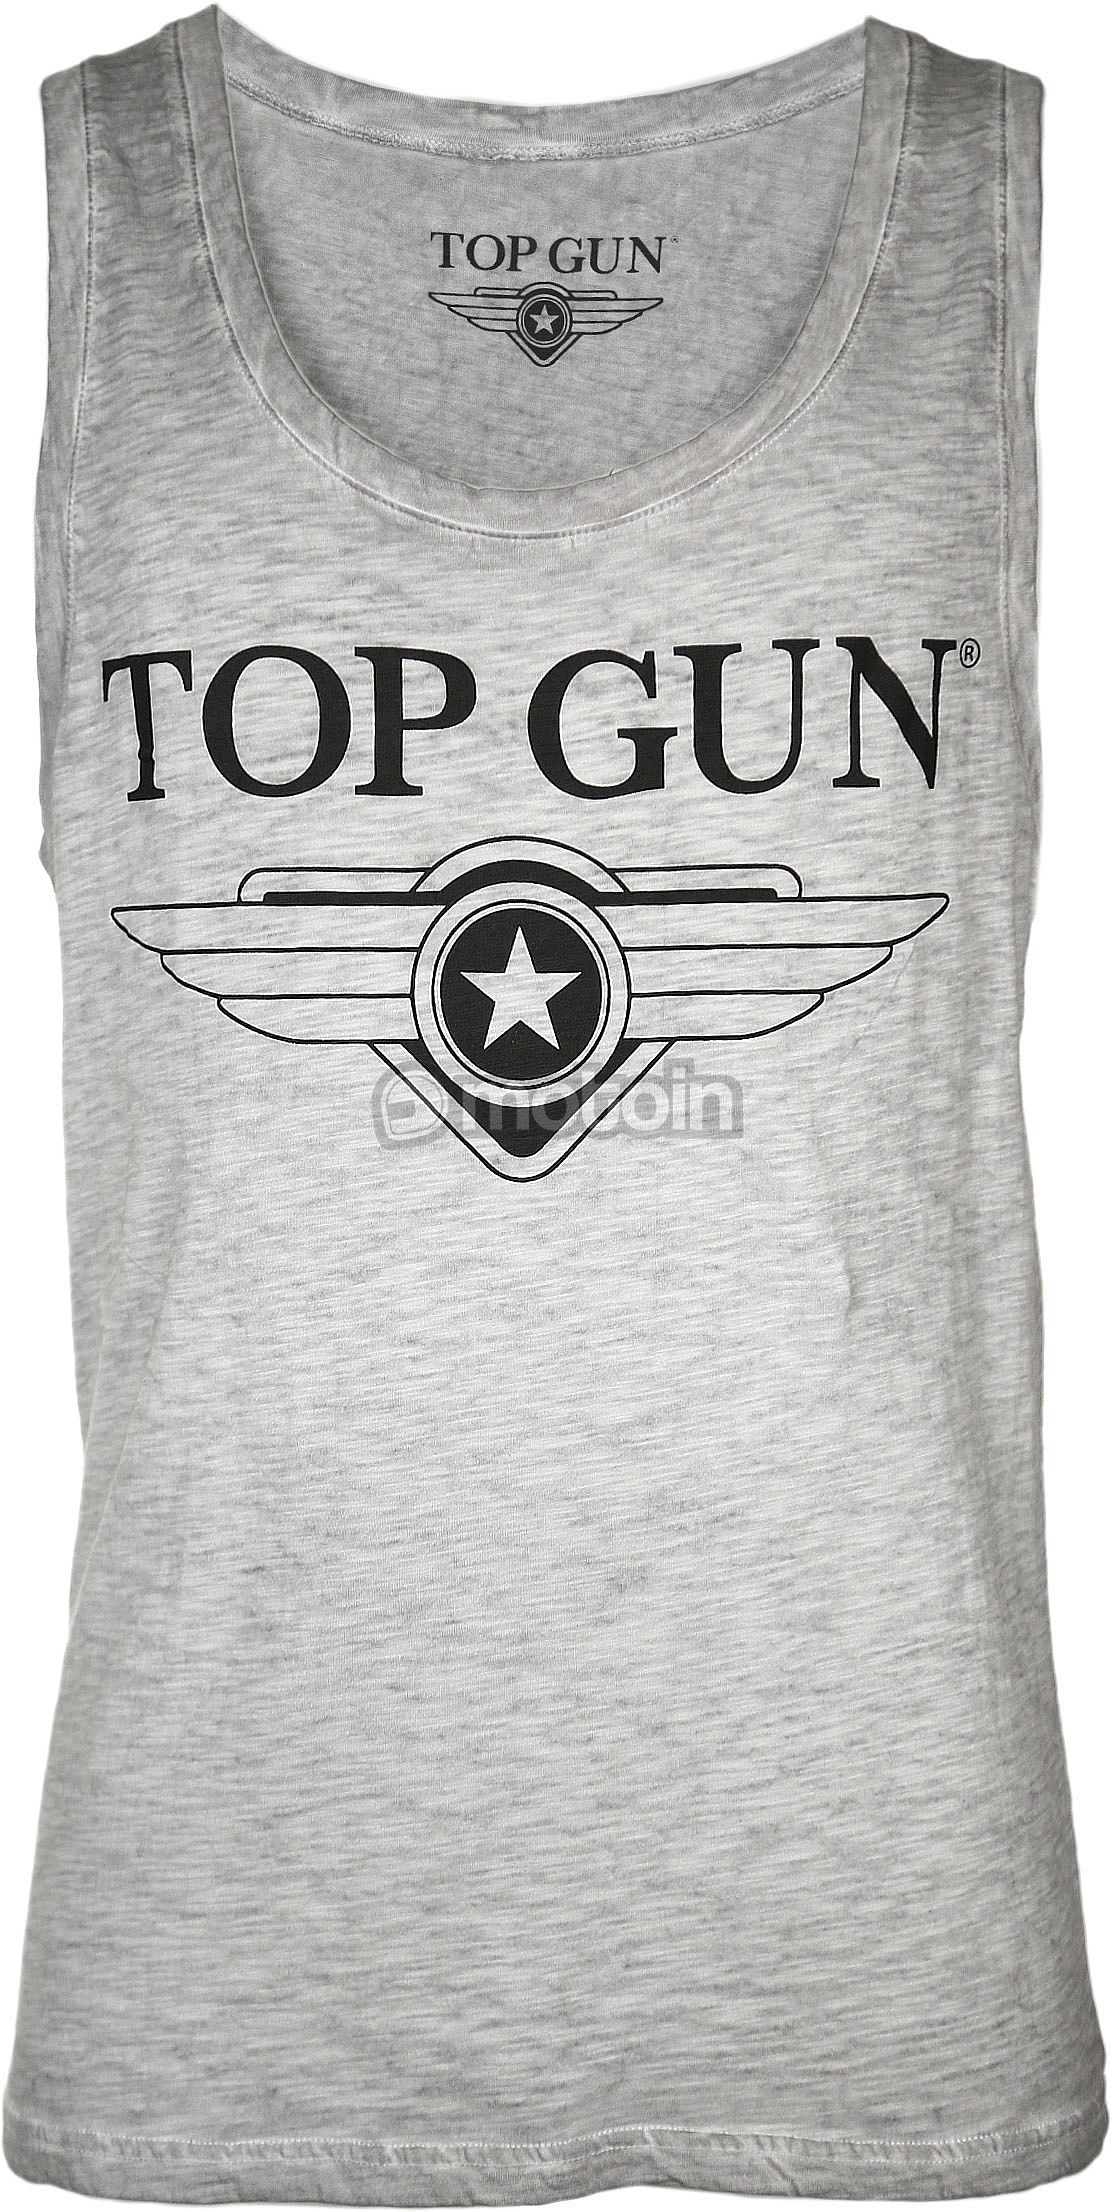 Top Gun Truck, Tanktop